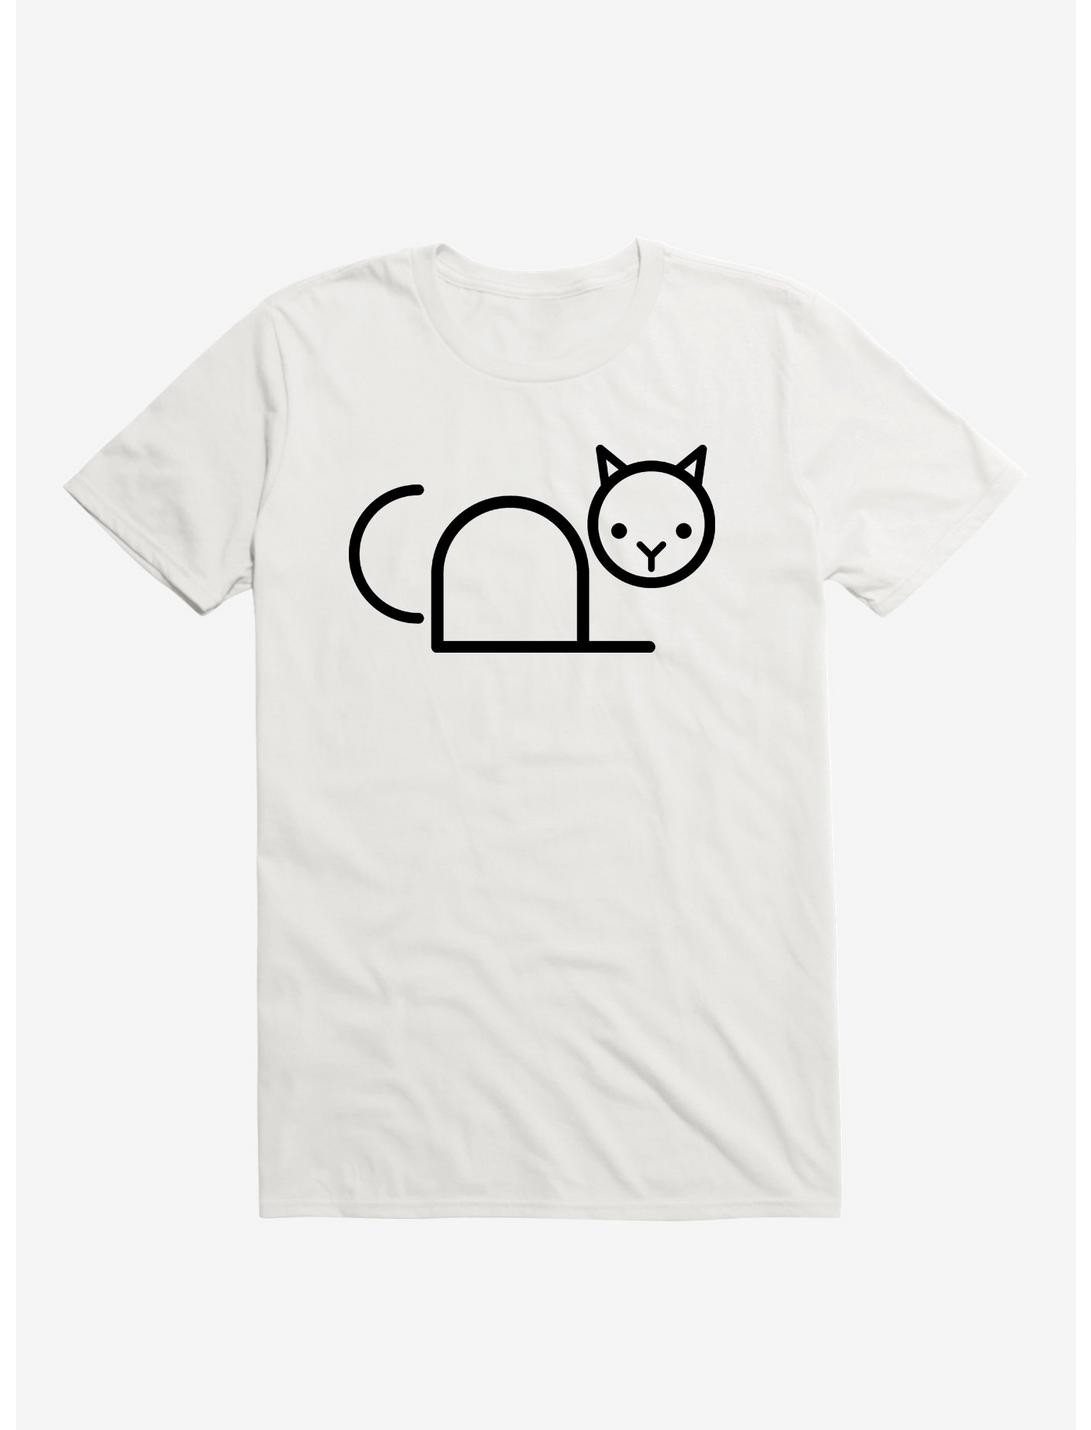 Copy Cat White T-Shirt, WHITE, hi-res